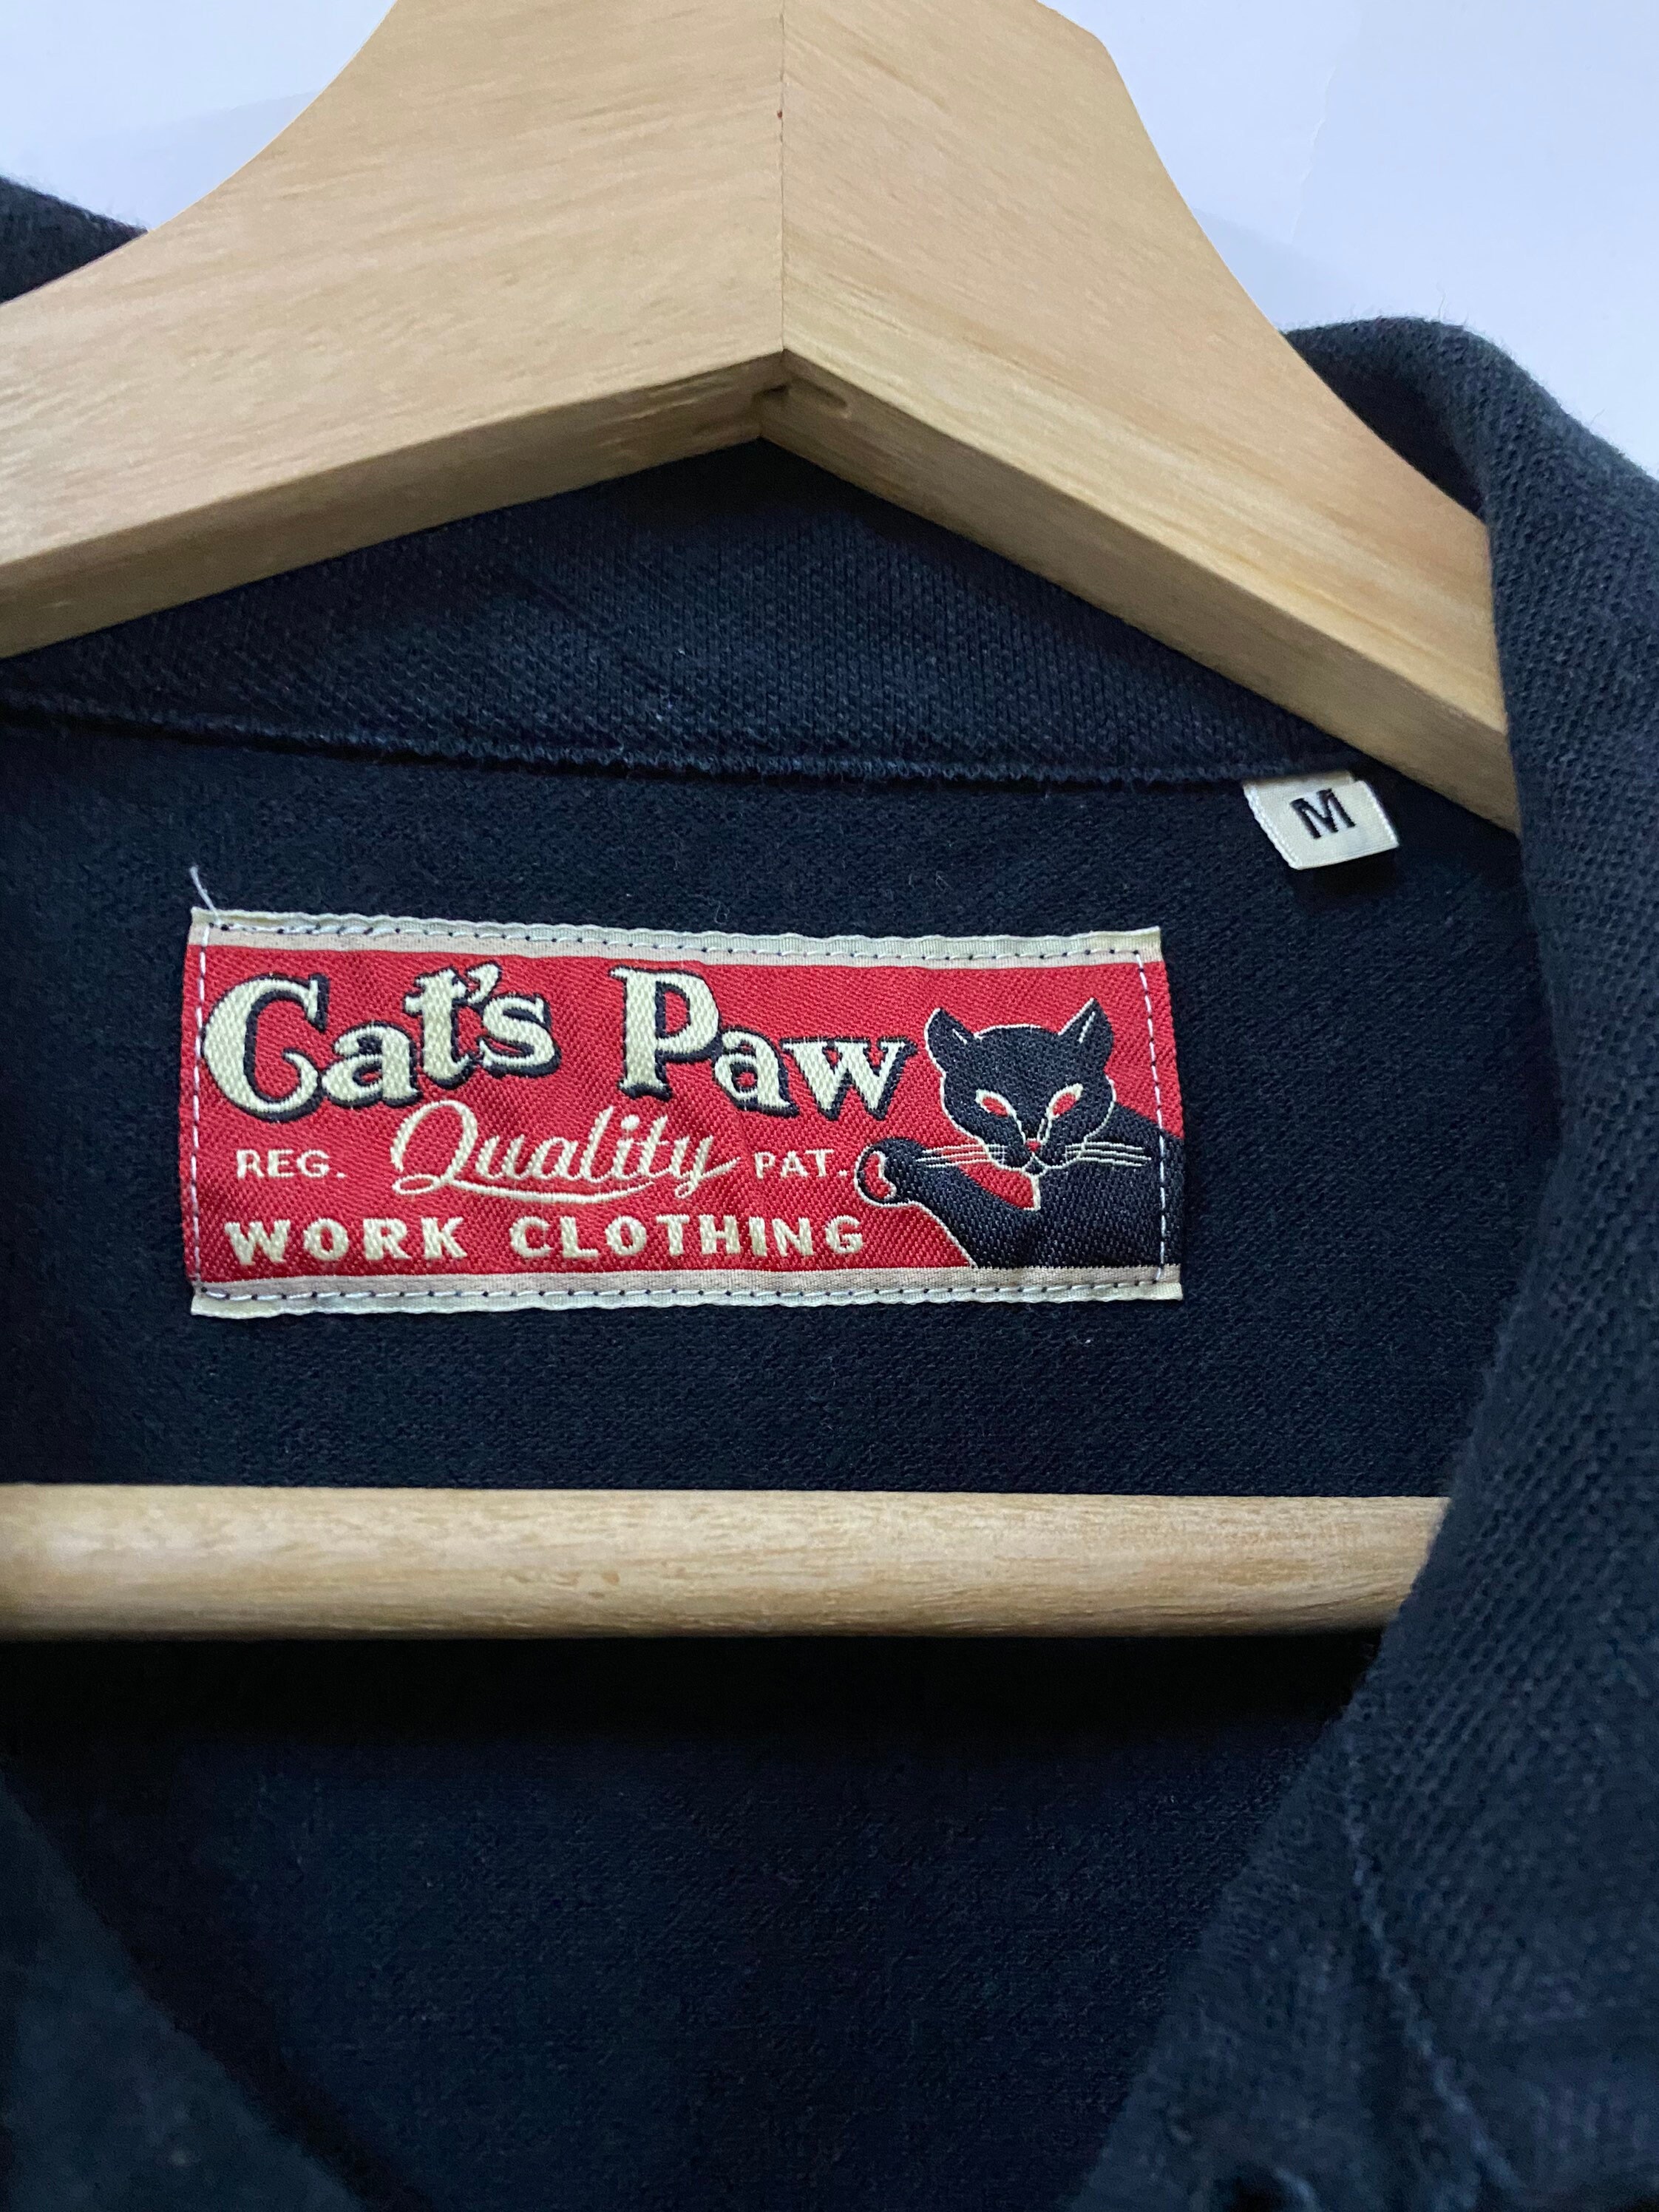 Kleding Herenkleding Overhemden & T-shirts Polos Rare Cat's Paw By Toyo Enterprise Polo Shirt Single Pocket Maat M WorkClocthing Brand Vtg!! 